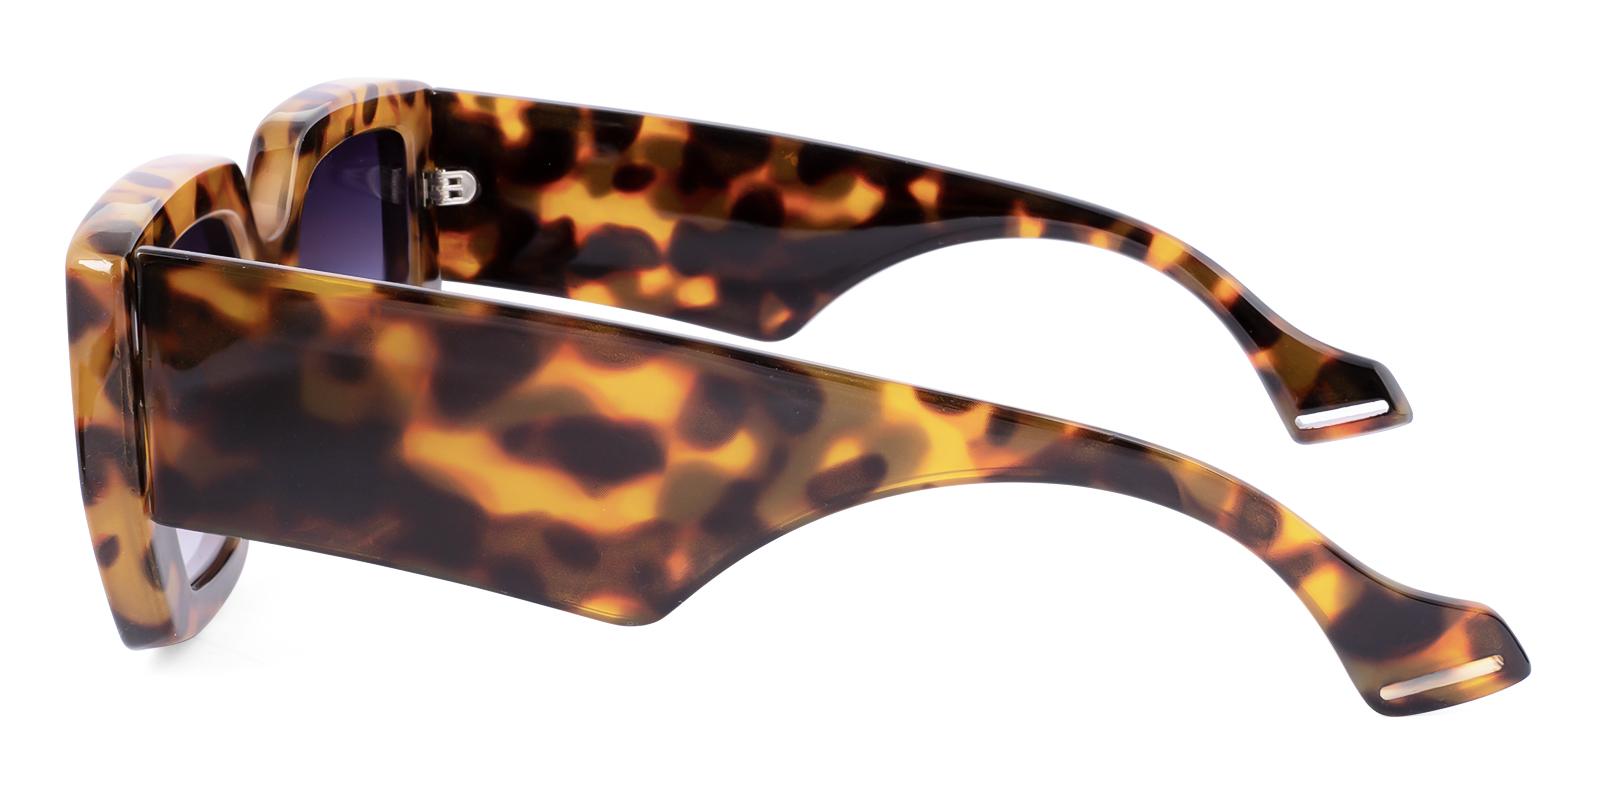 Juriaire Tortoise Acetate Sunglasses , UniversalBridgeFit Frames from ABBE Glasses